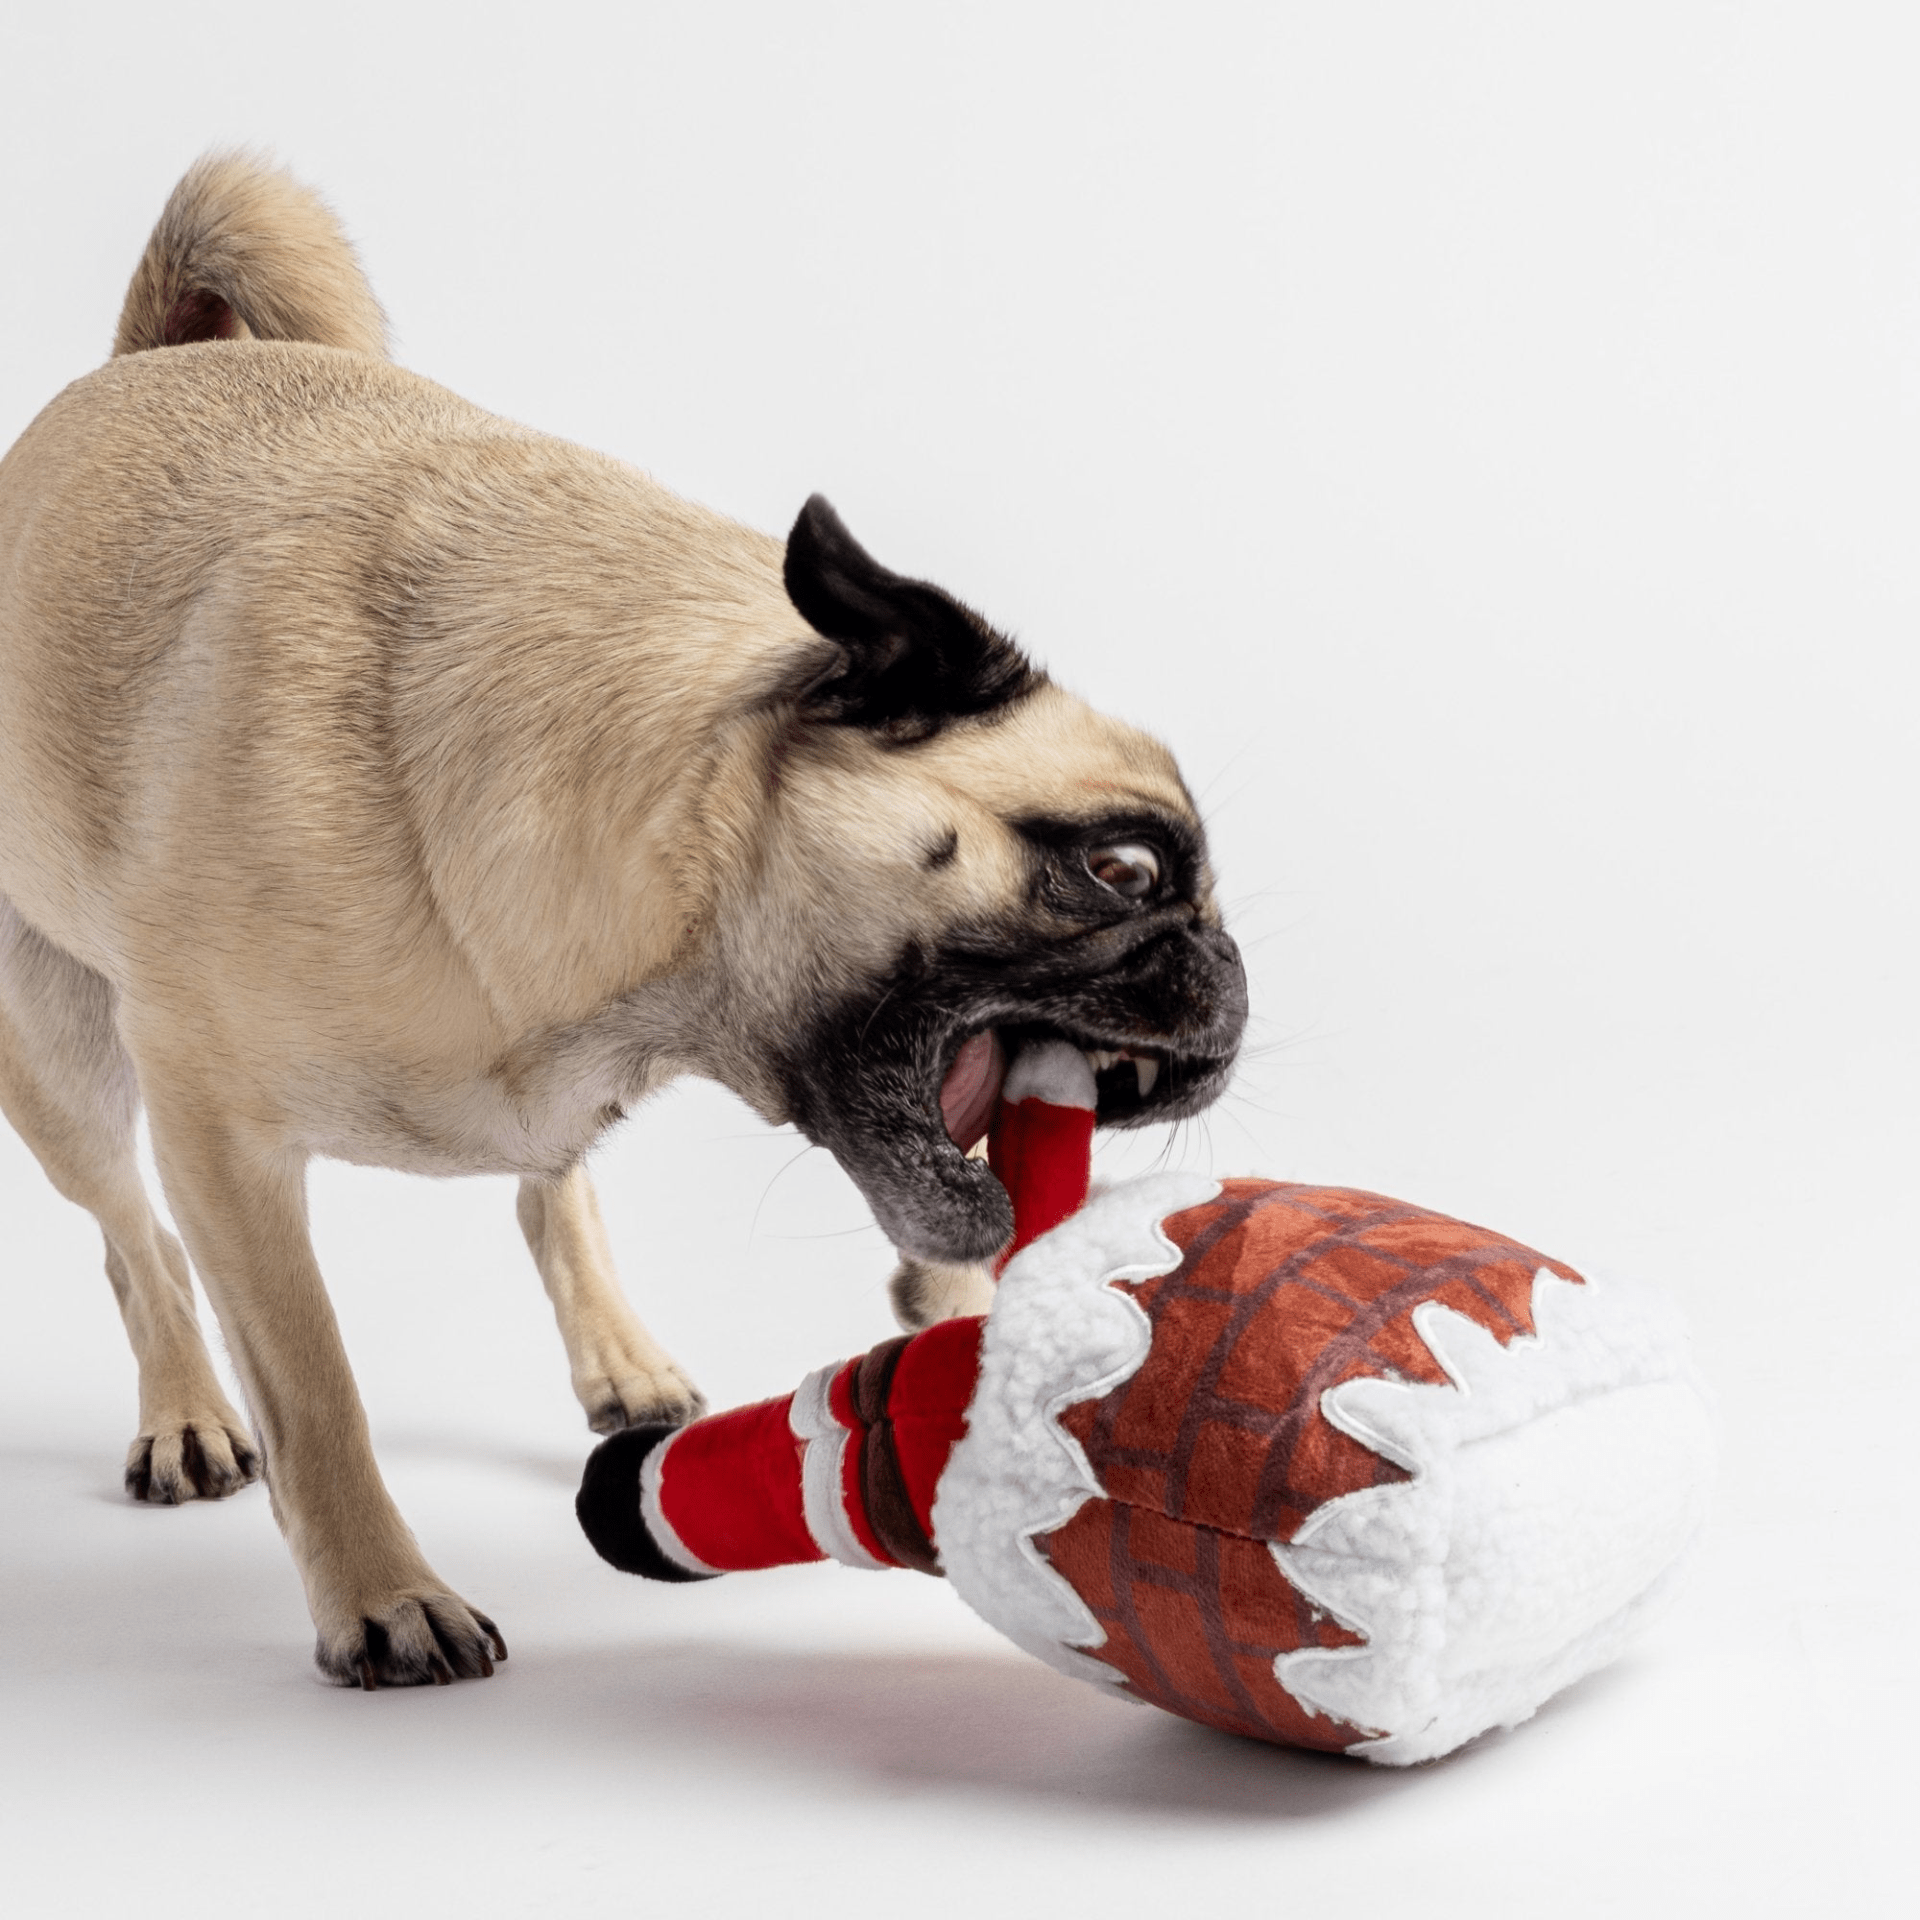 Dog and Pet Stuff Santa Chimney Toy